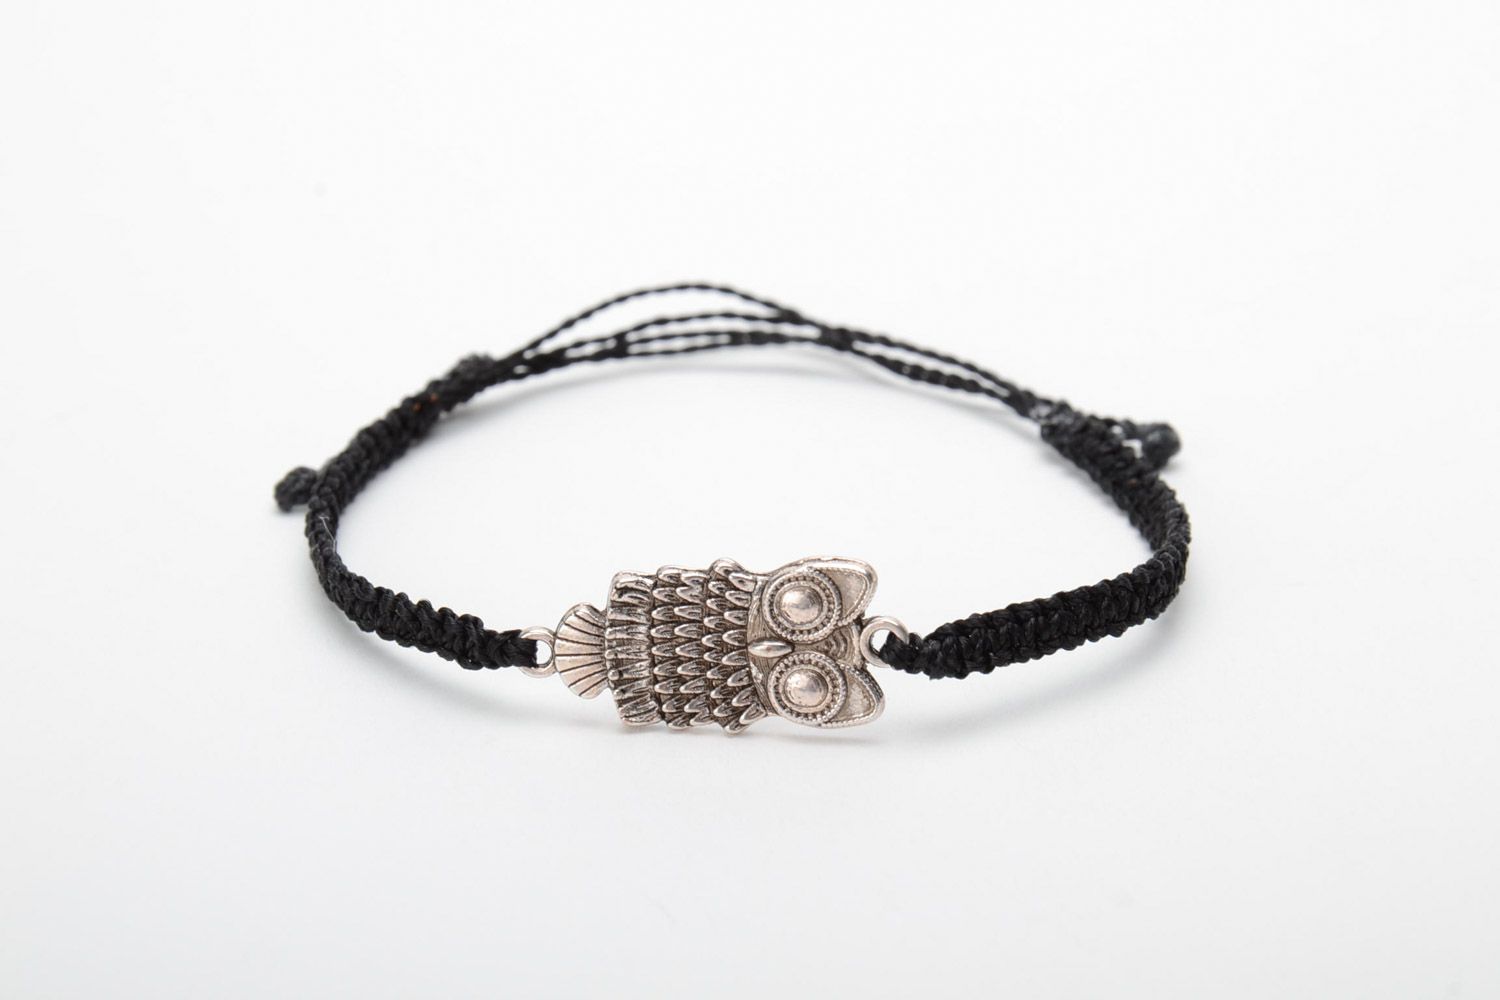 Handmade black woven capron thread wrist bracelet with metal charm in the shape of owl photo 5